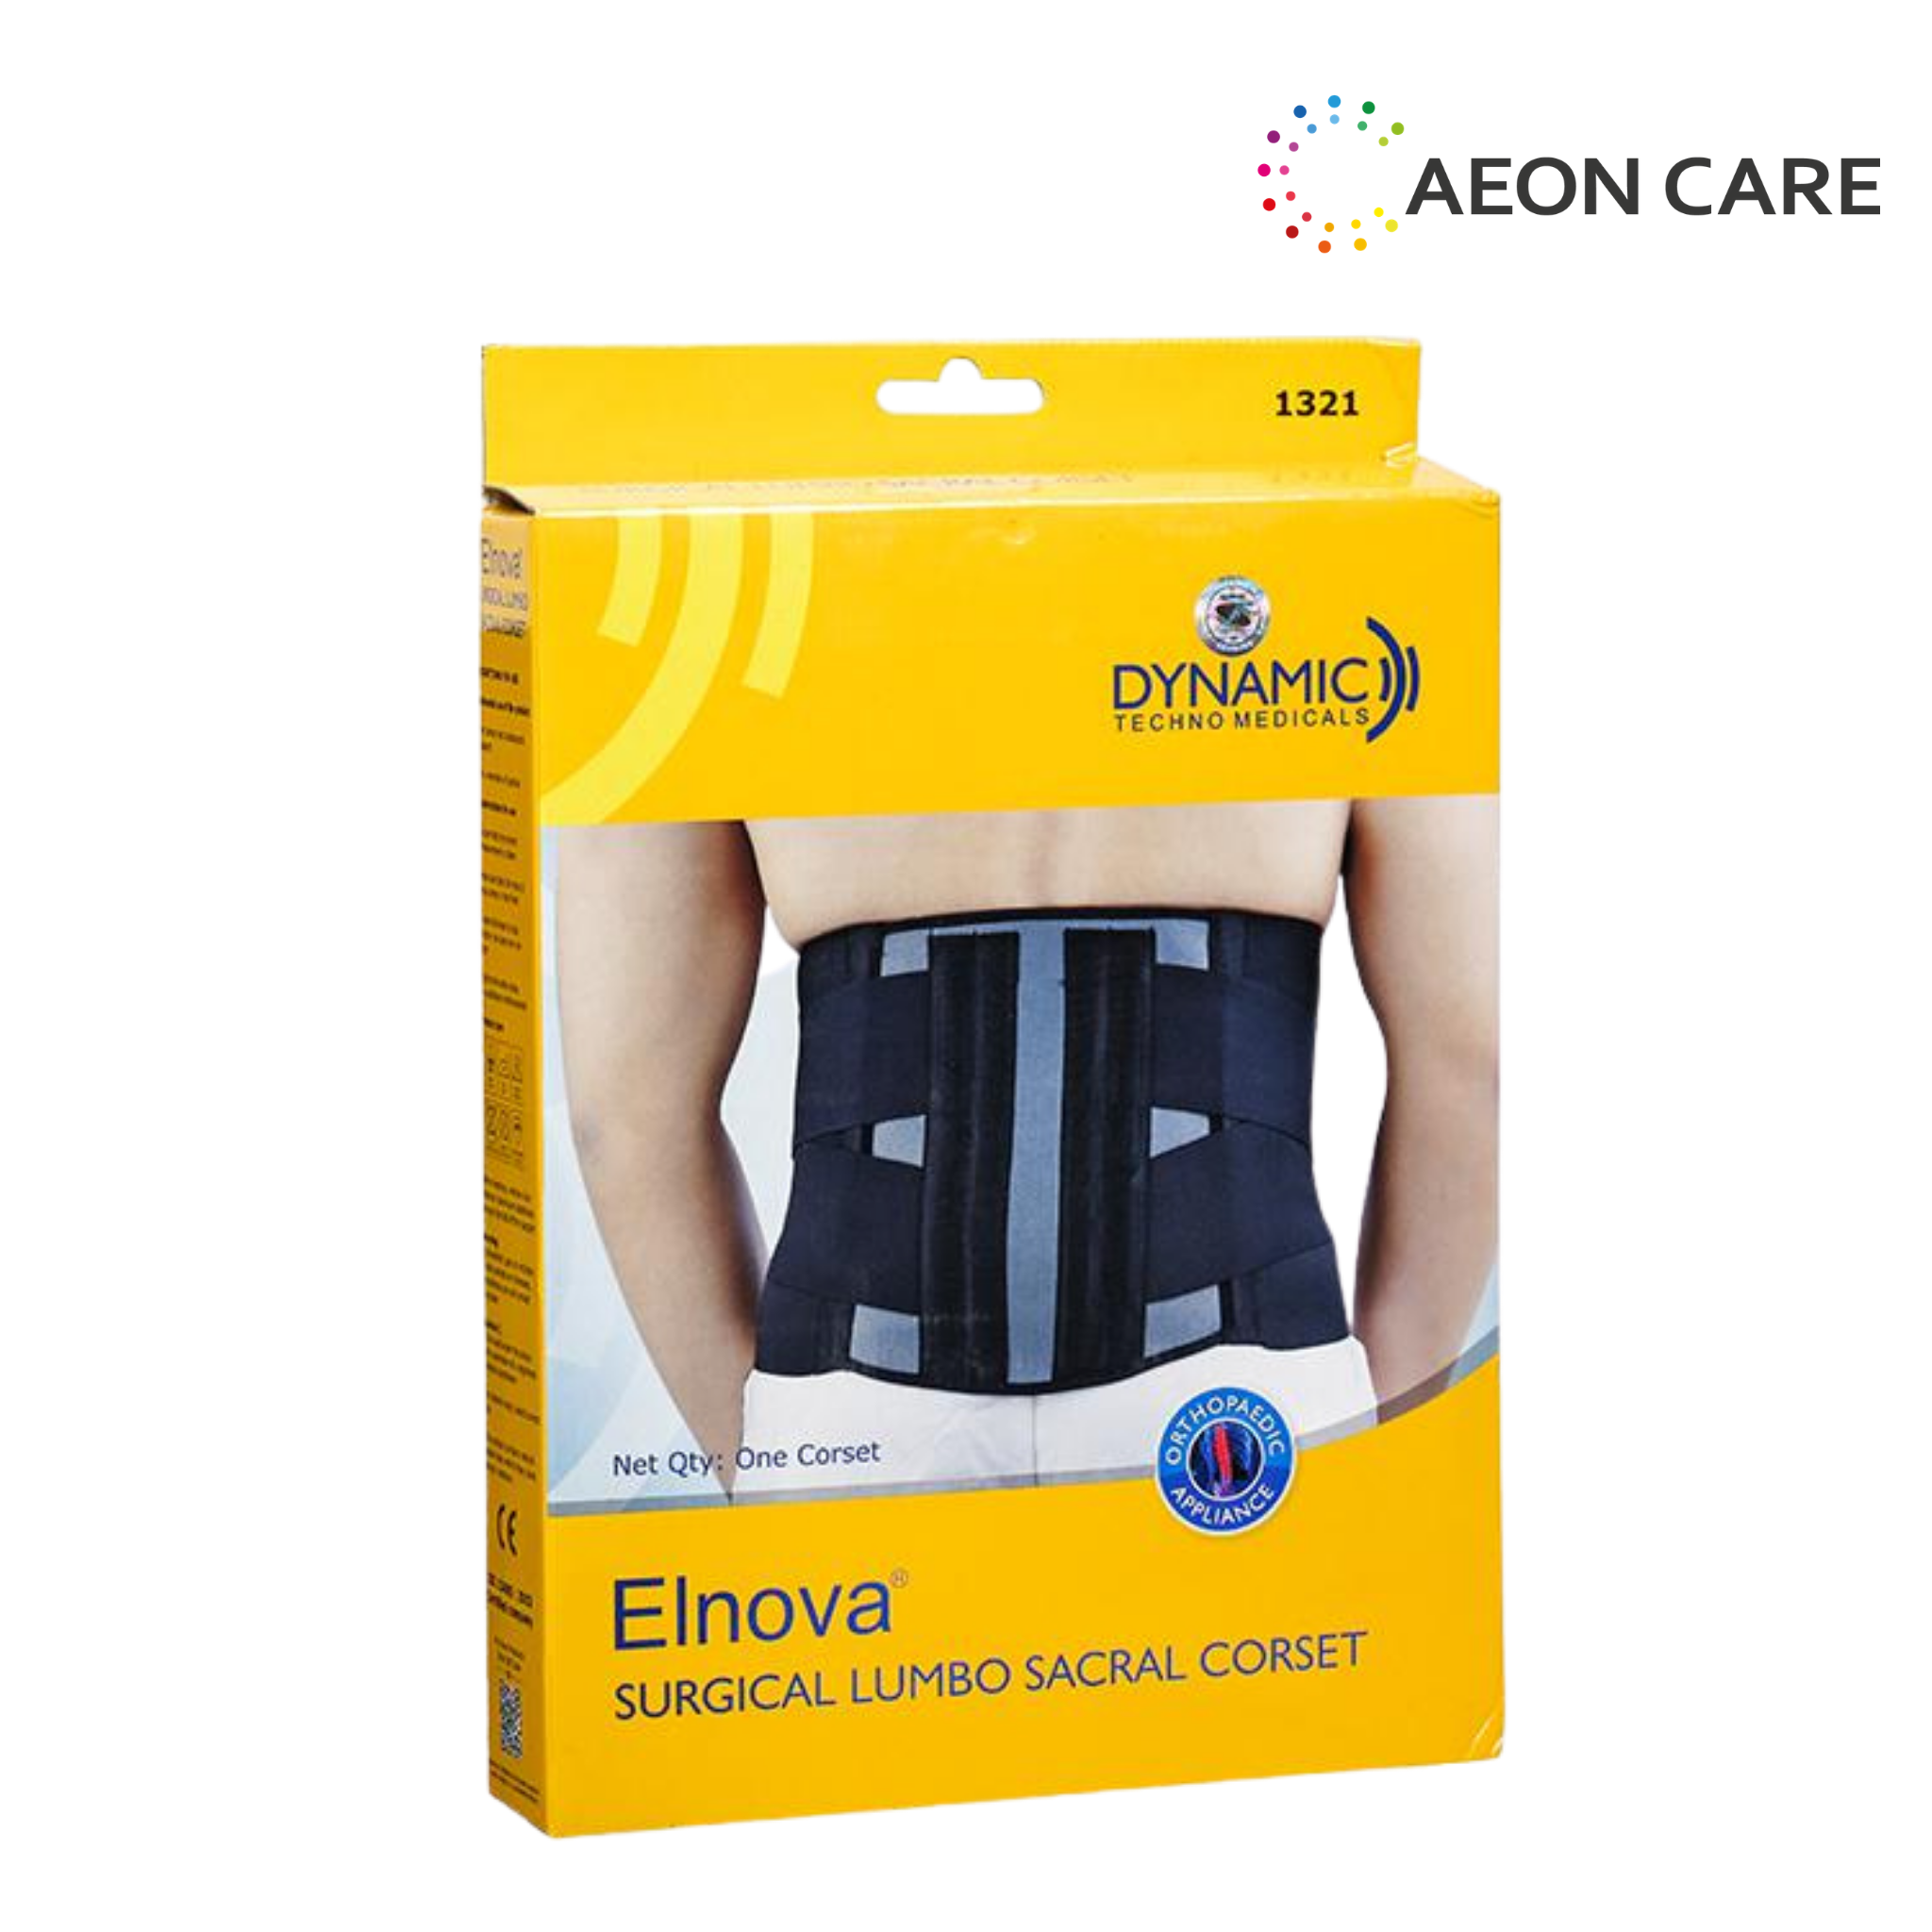 Elnova Surgical Lumbo Sacral Corset price in Chennai | Back Pain Belt at Best Price in Chennai